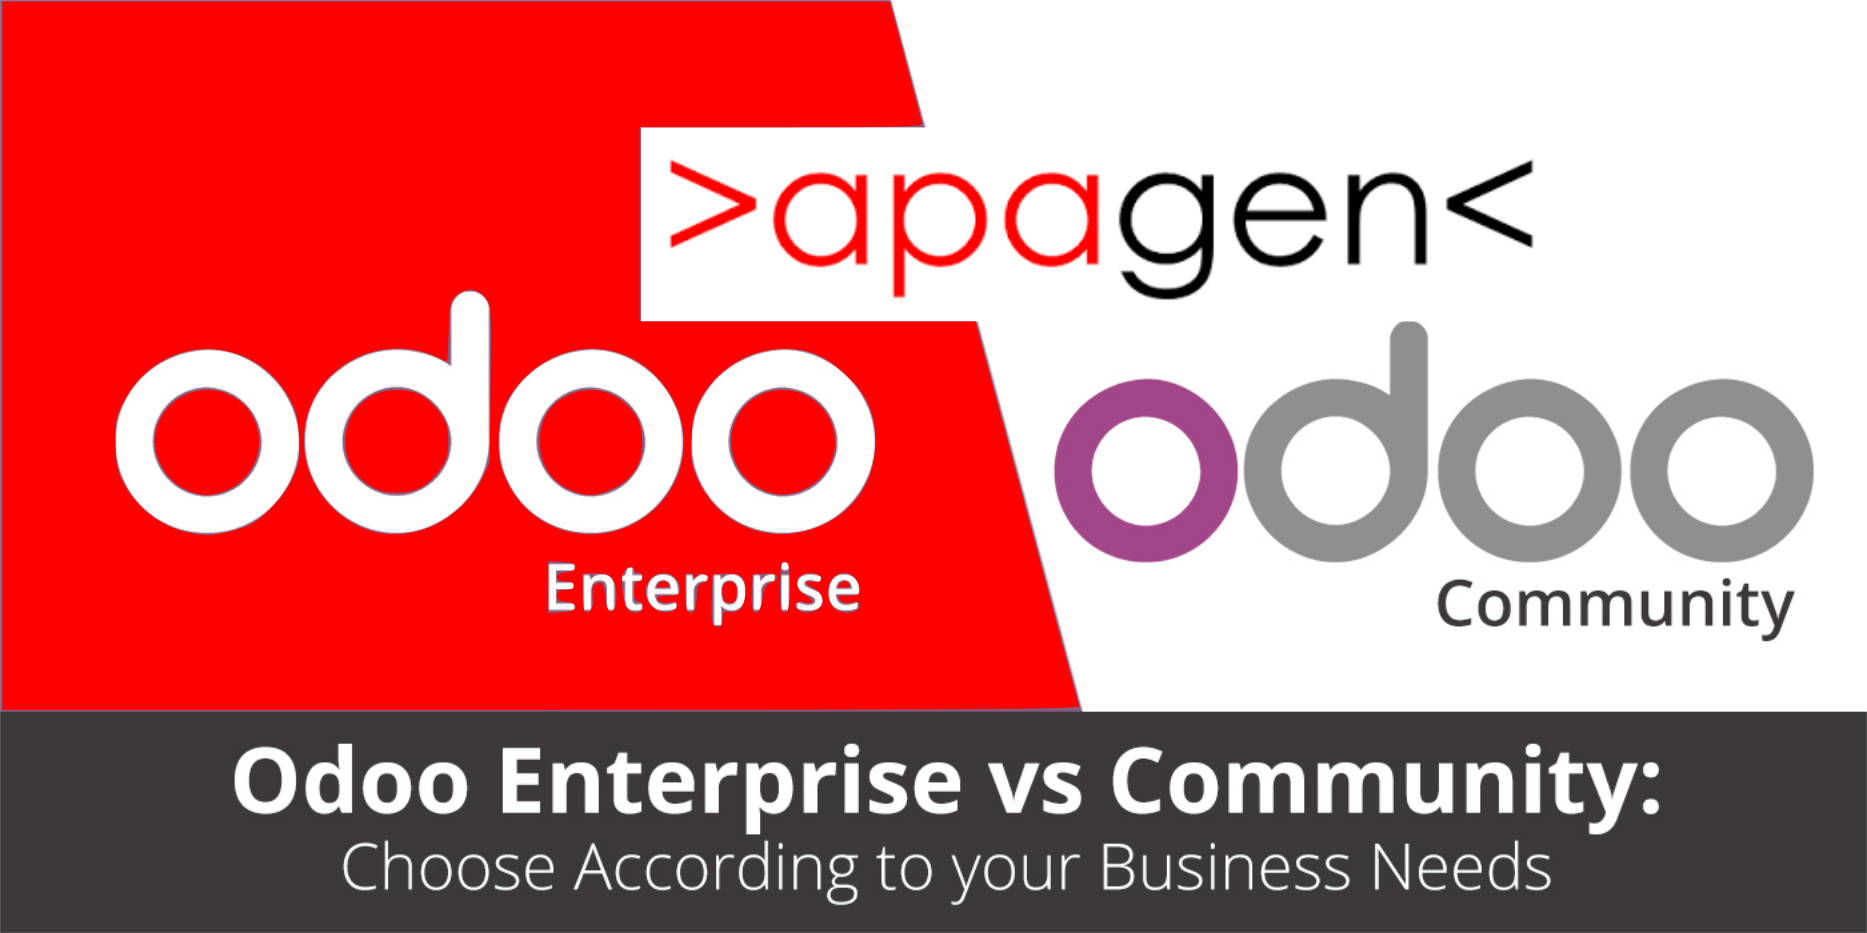 Odoo Community vs Odoo Enterprise by Apagen Solutions